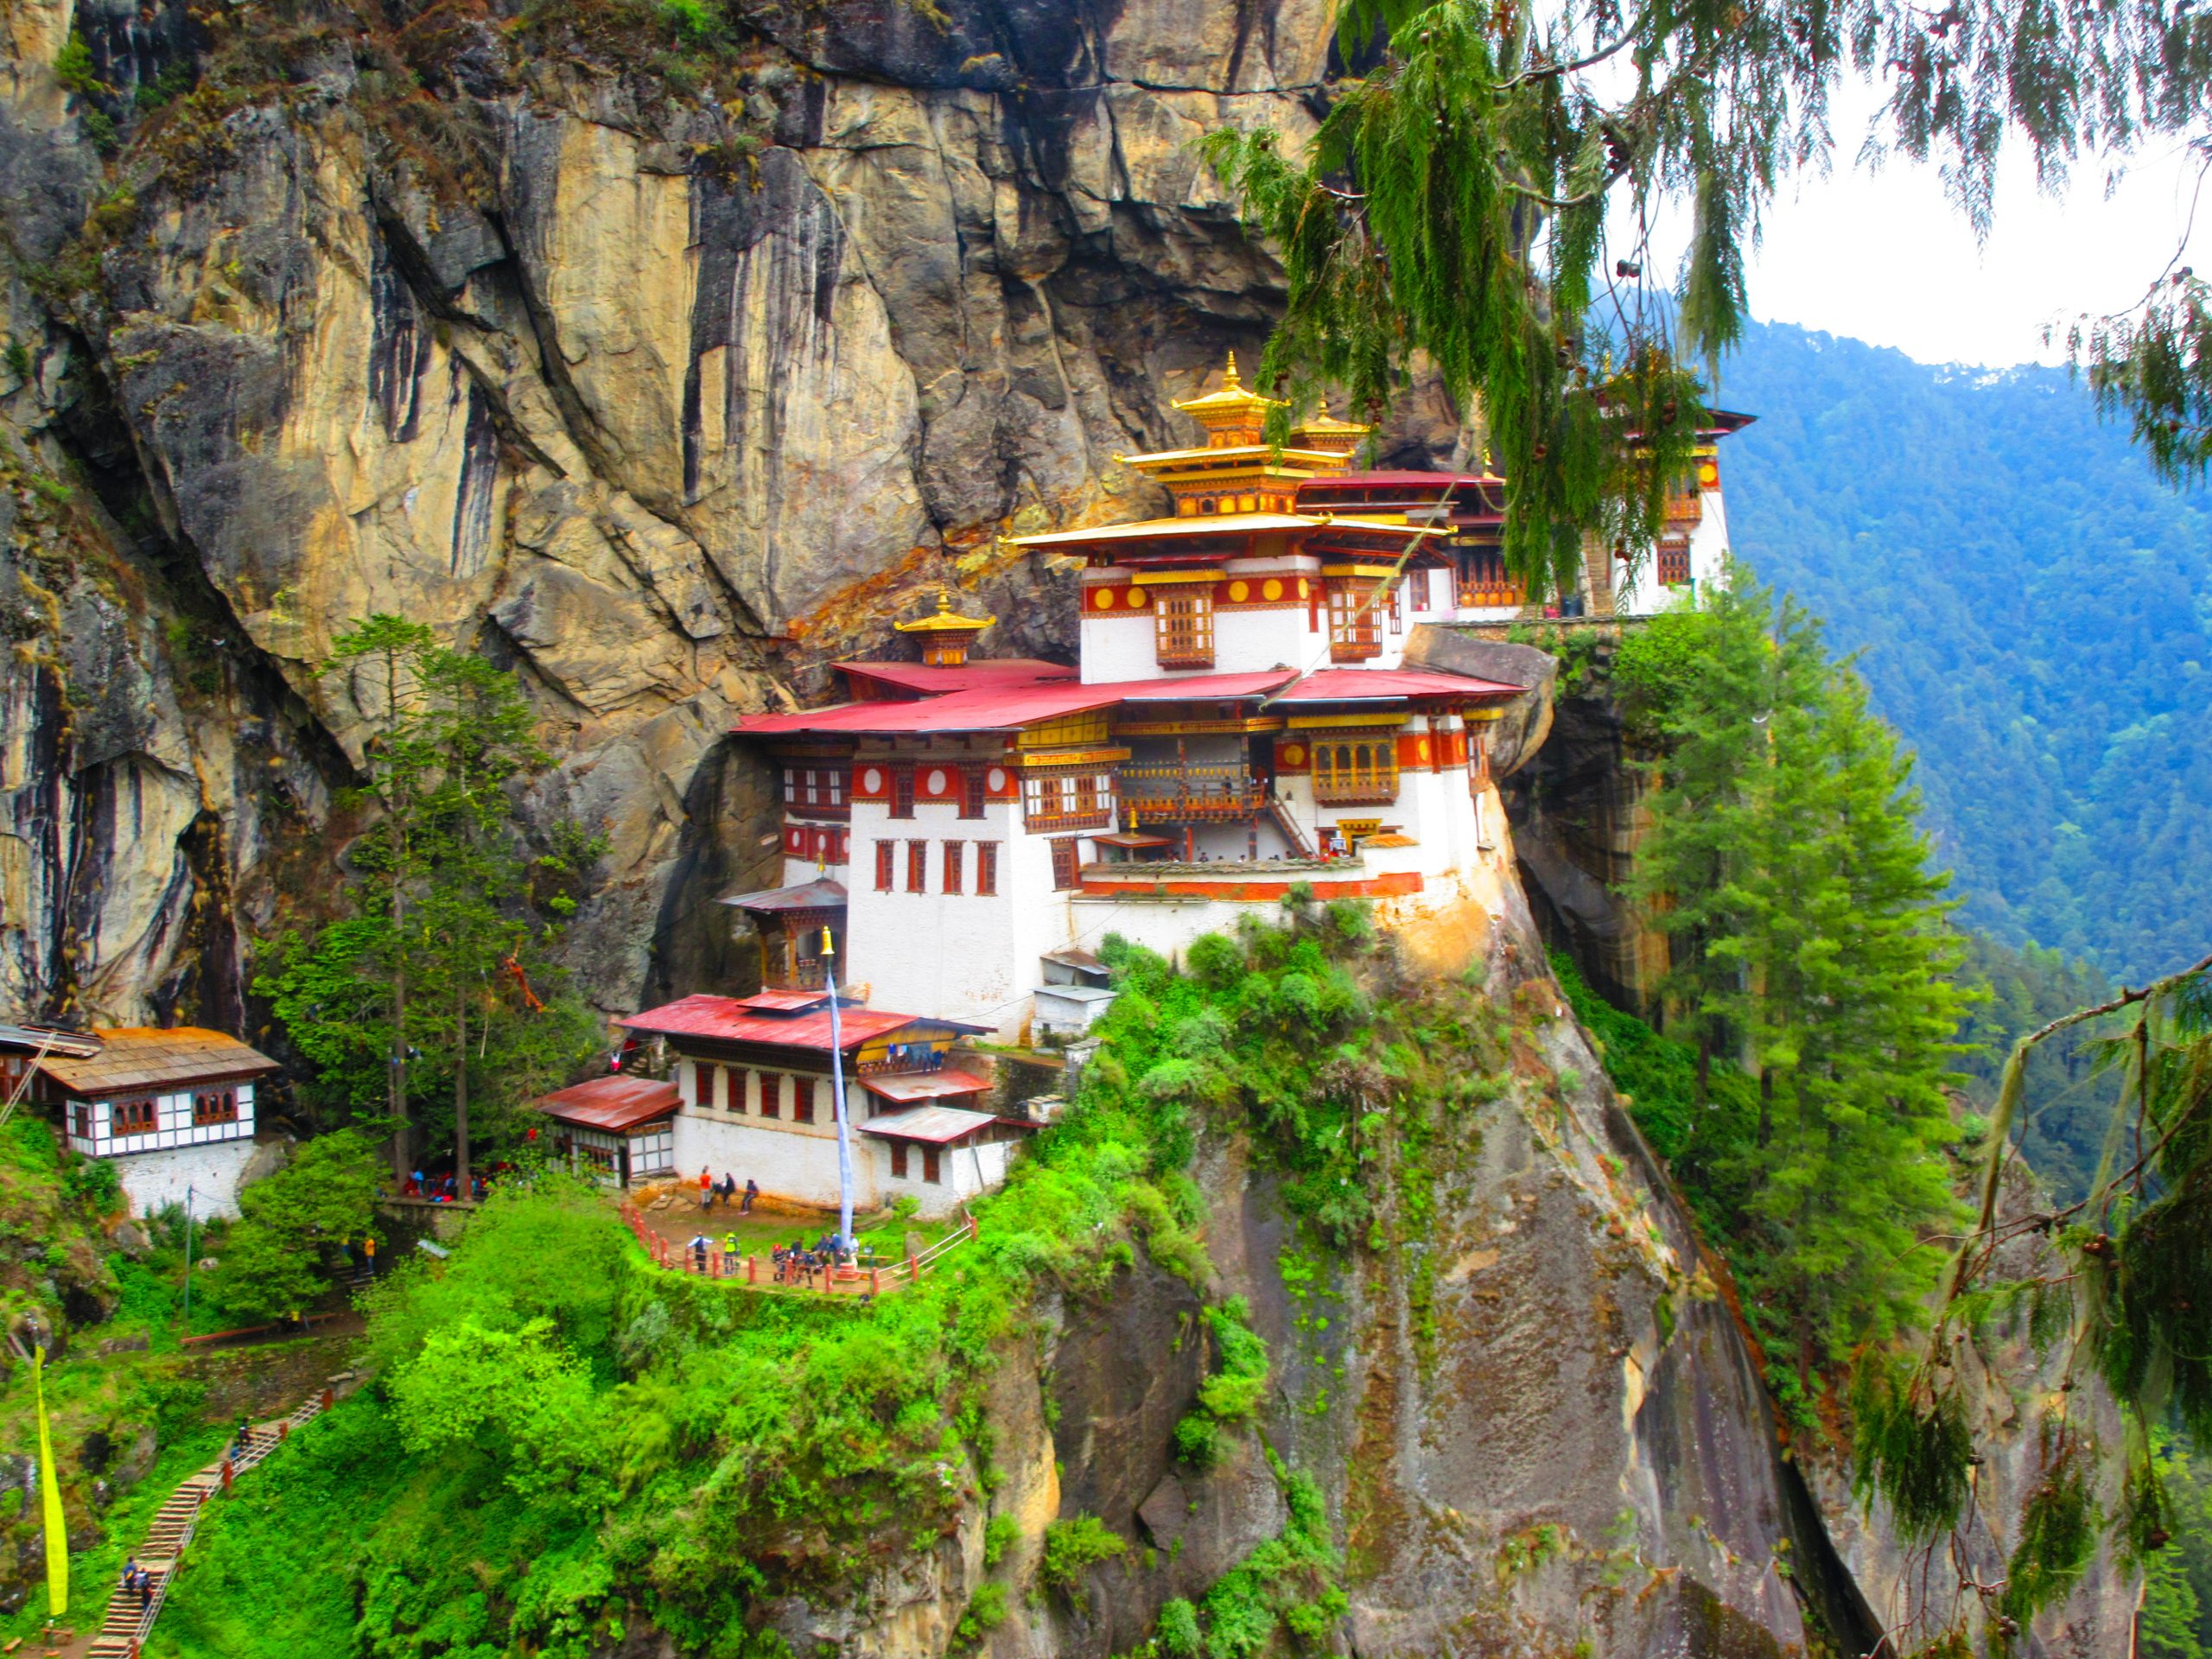 Tiger's Nest Monastery in Bhutan - Free Image by Ish Consul on PixaHive.com